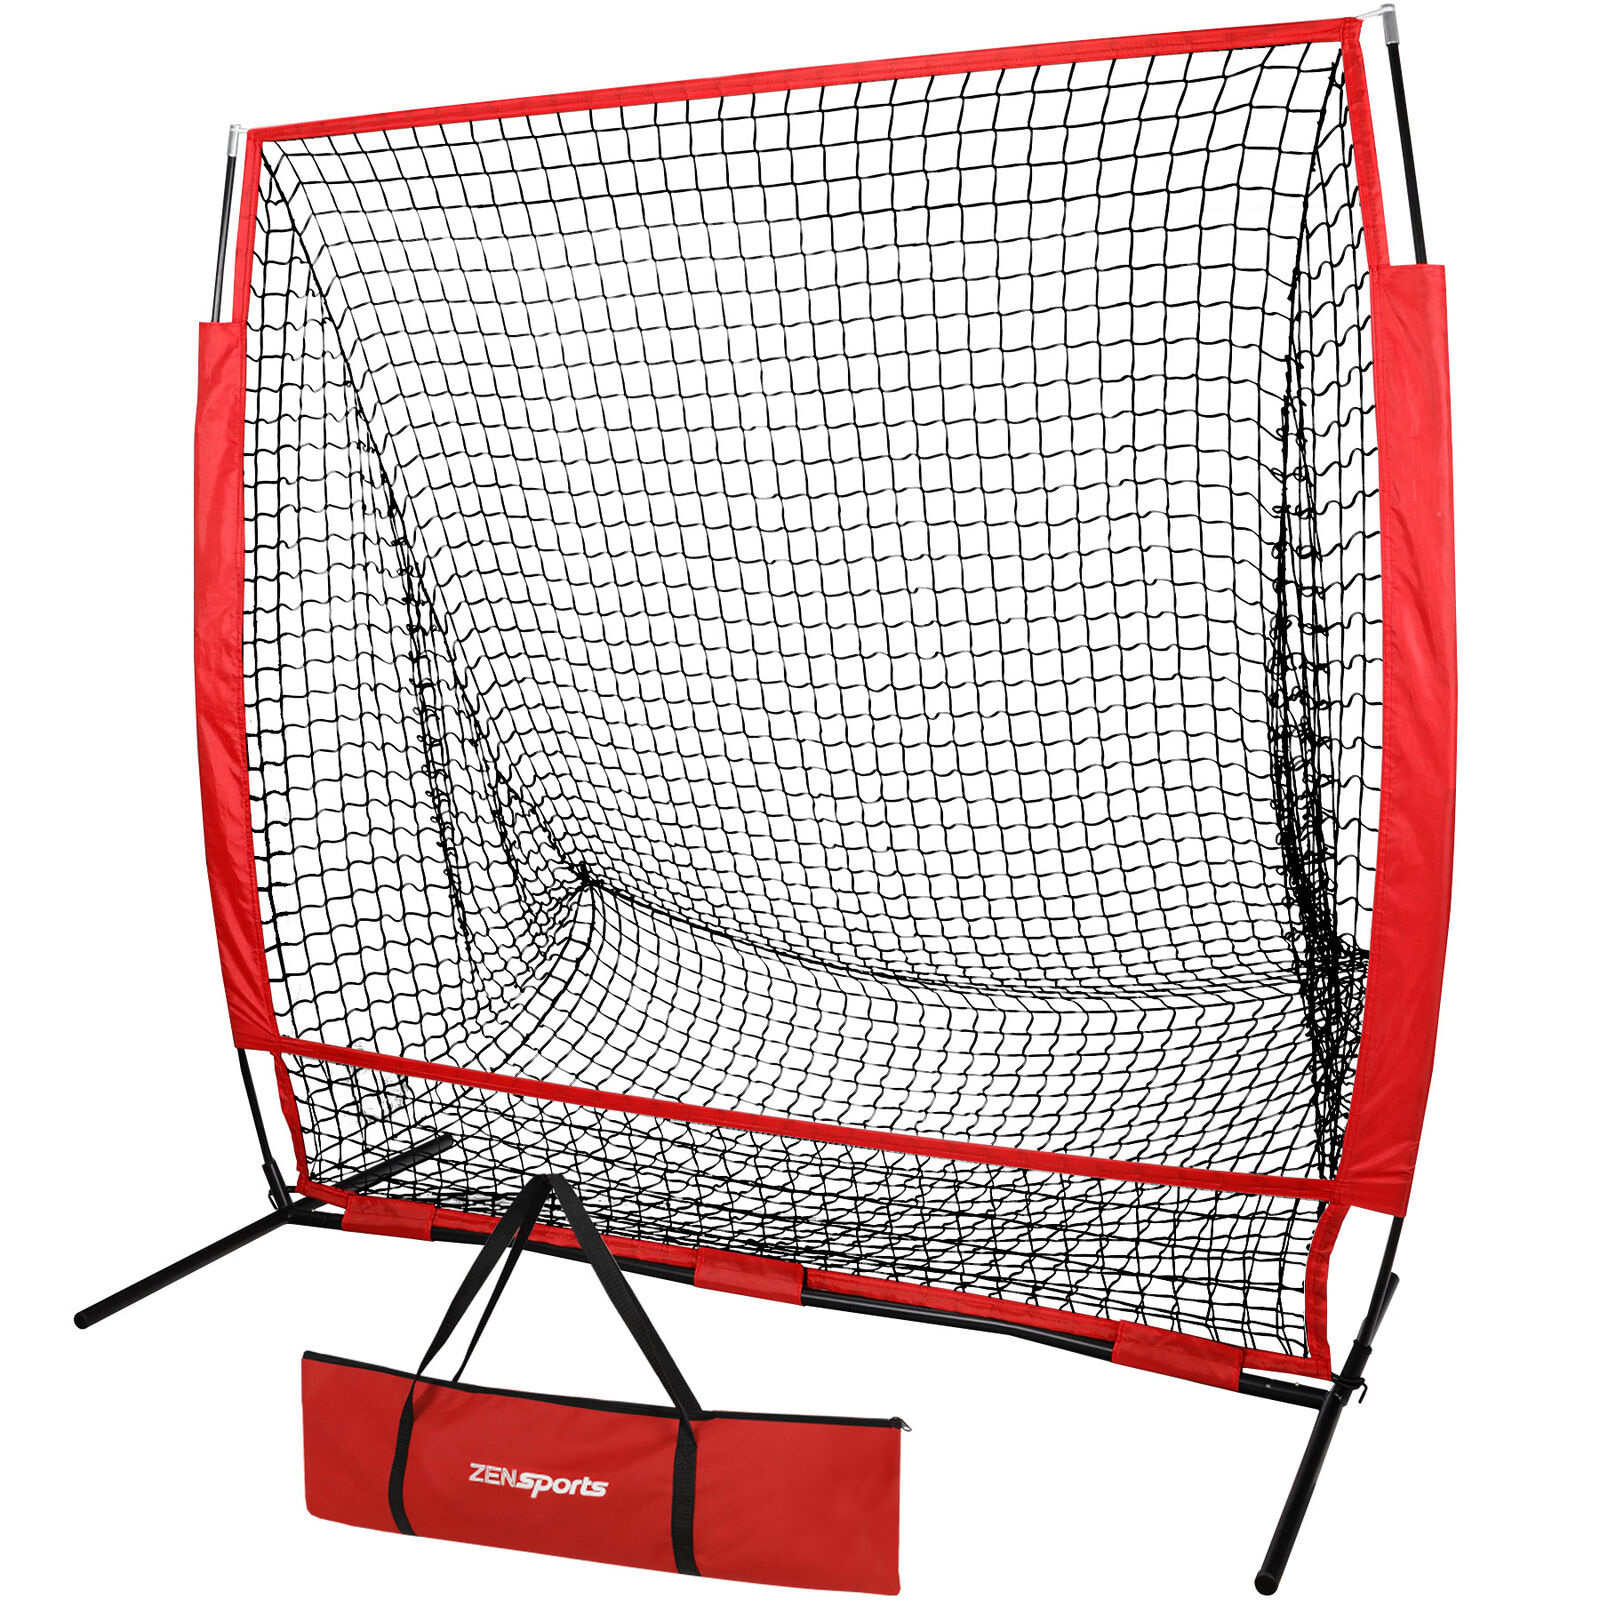 5'x5' Portable Baseball Softball Practice Batting Training Net W/ Bag Ez Setup